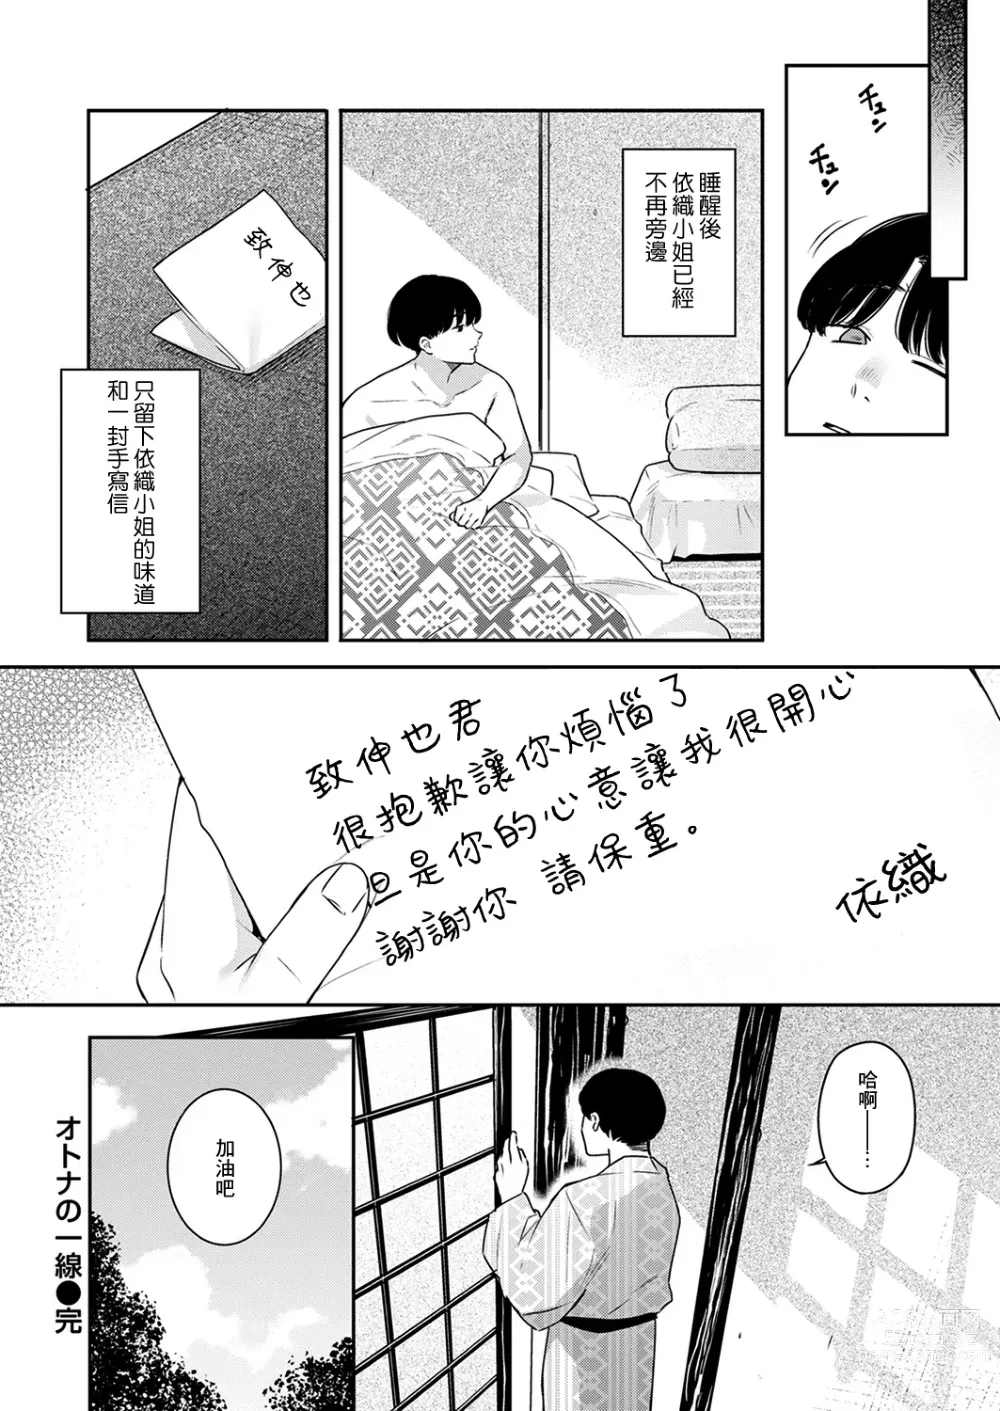 Page 28 of manga Otona no Issen Lesson 2